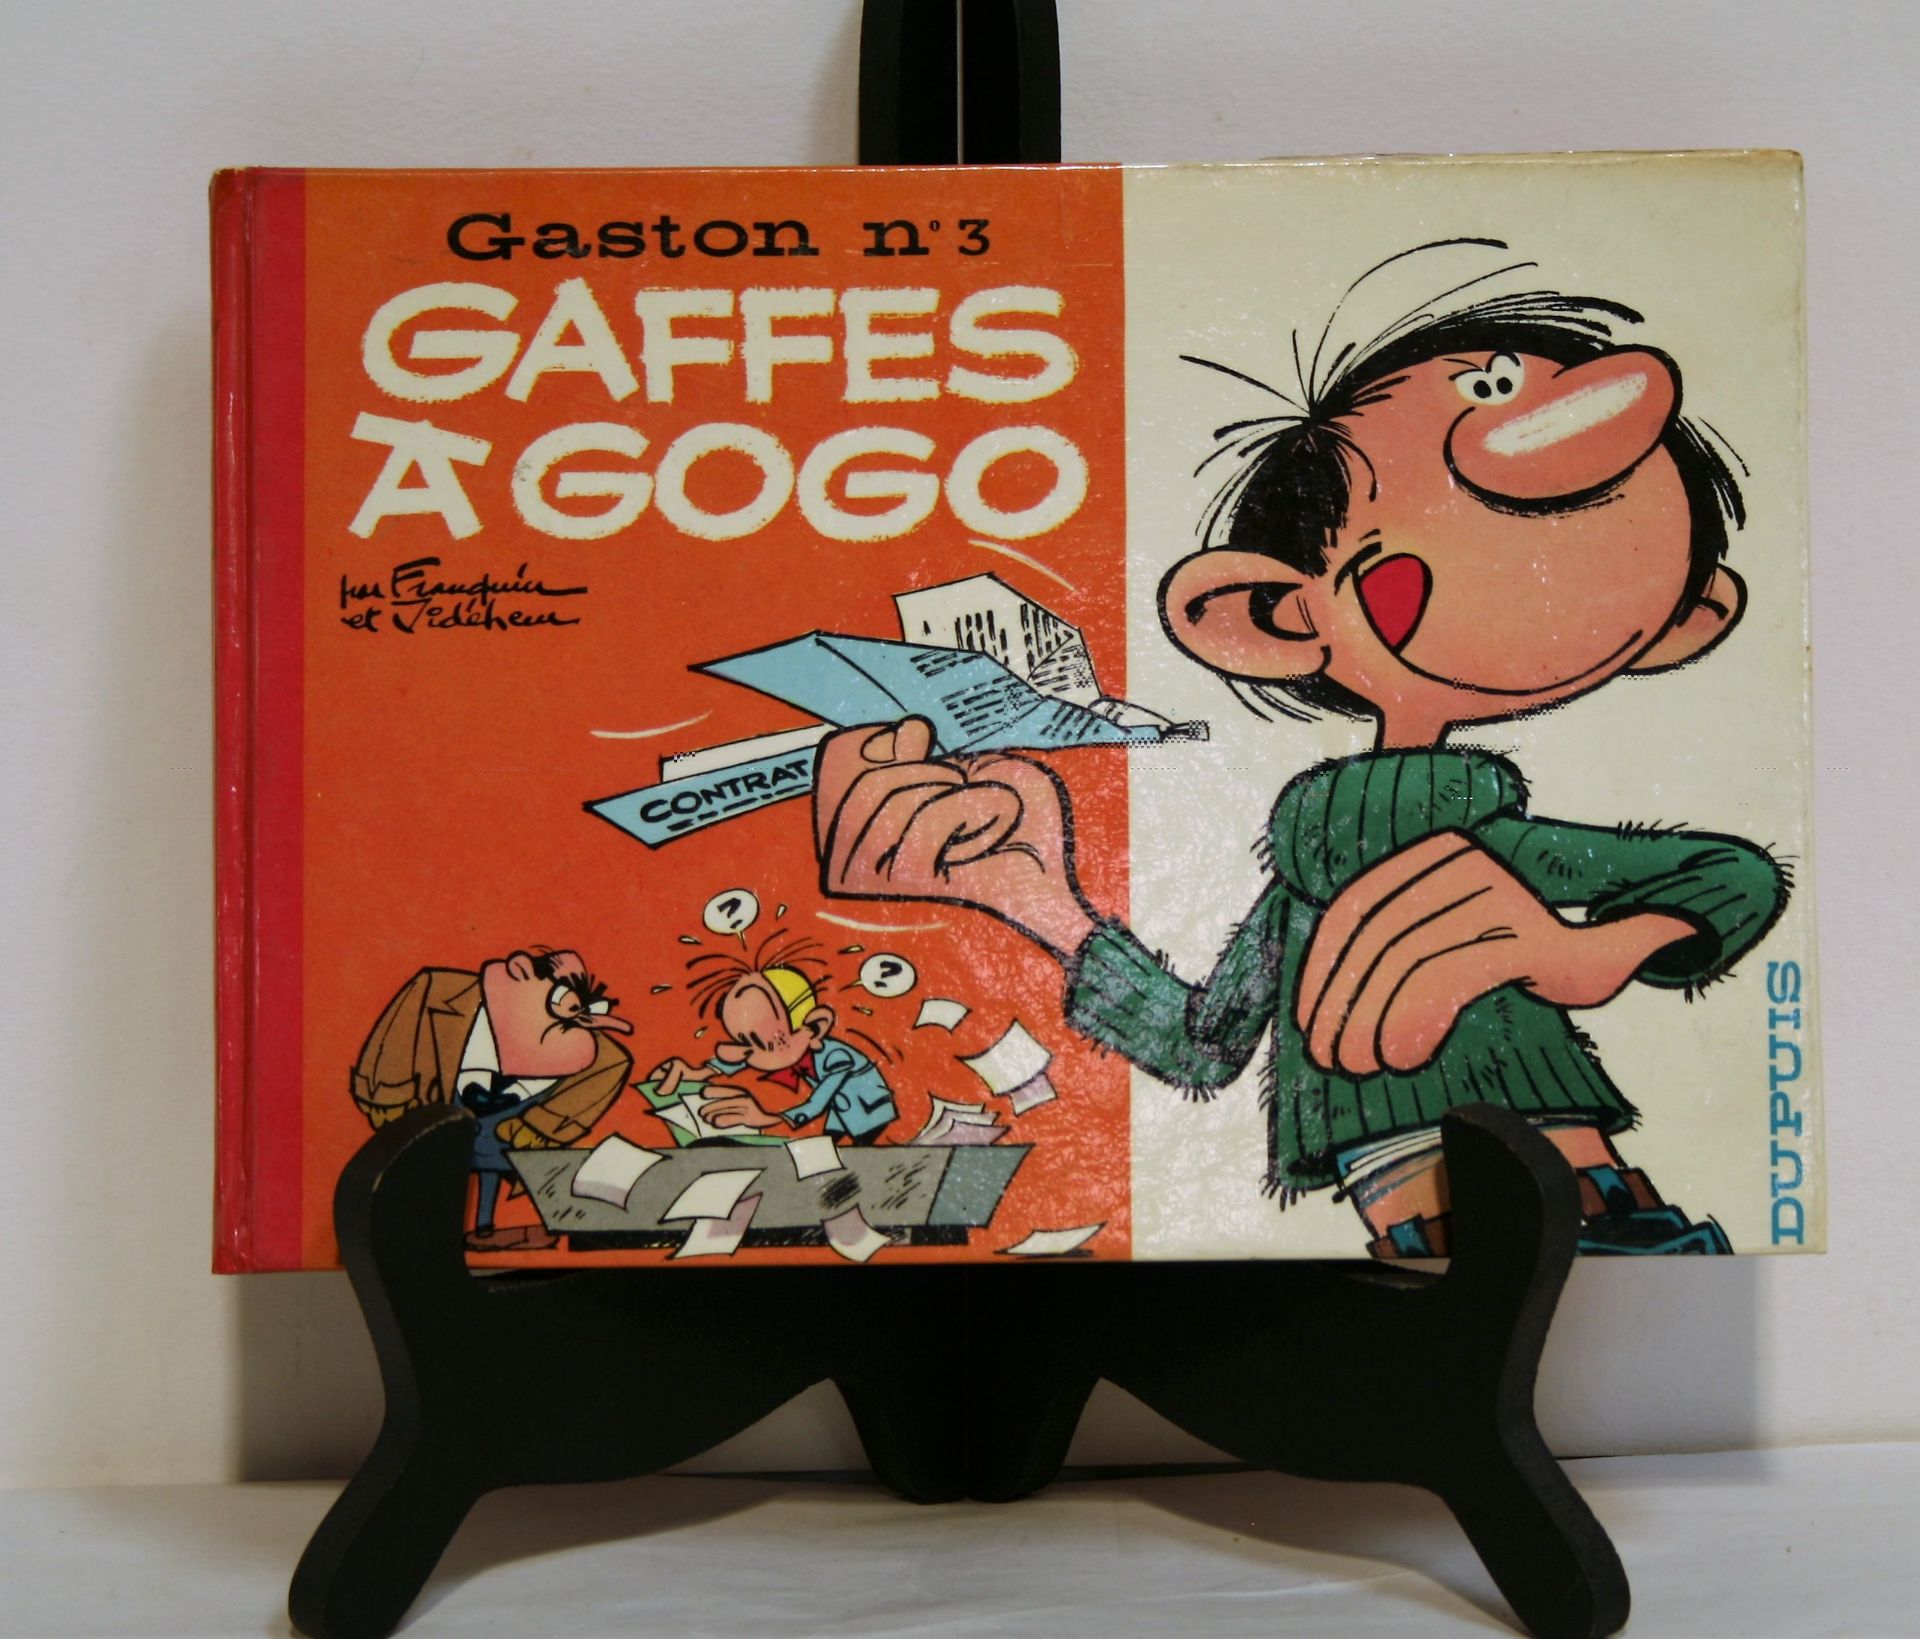 GASTON LAGAFFE FRANQUIN GASTON LAGAFFE Band 3: Gaffes à gogo, Originalausgabe von 1964 (